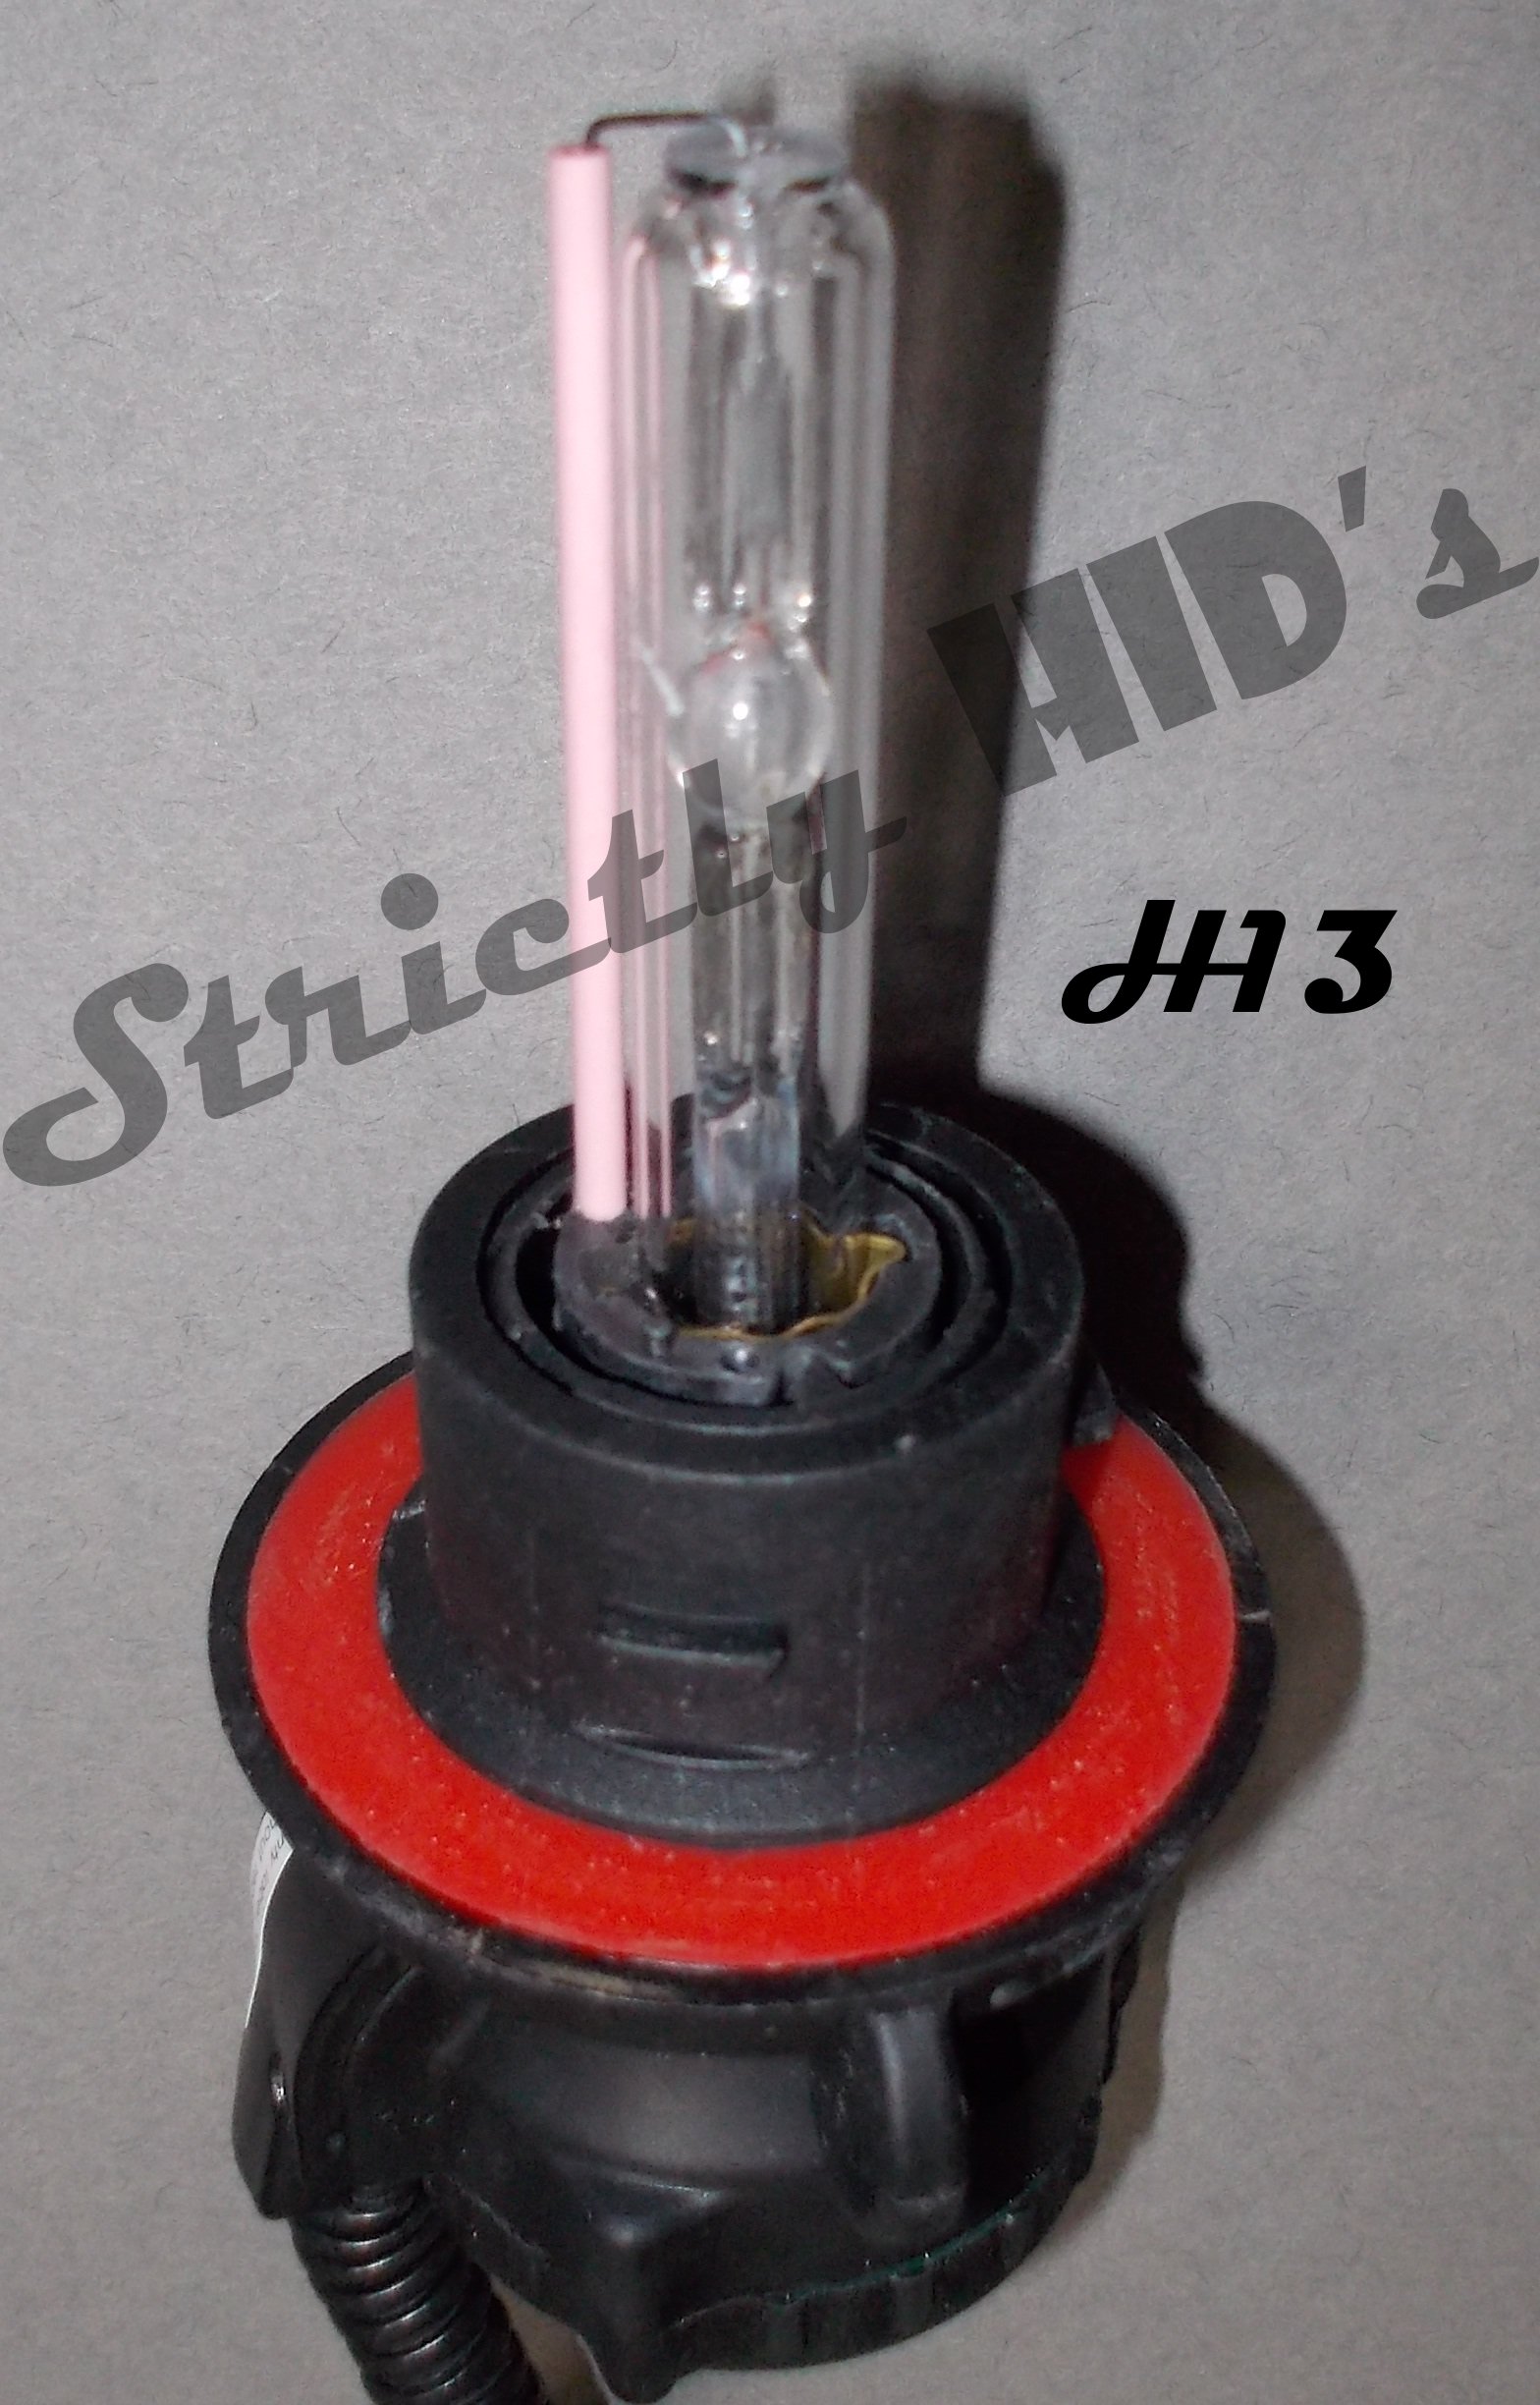 H13 bulb